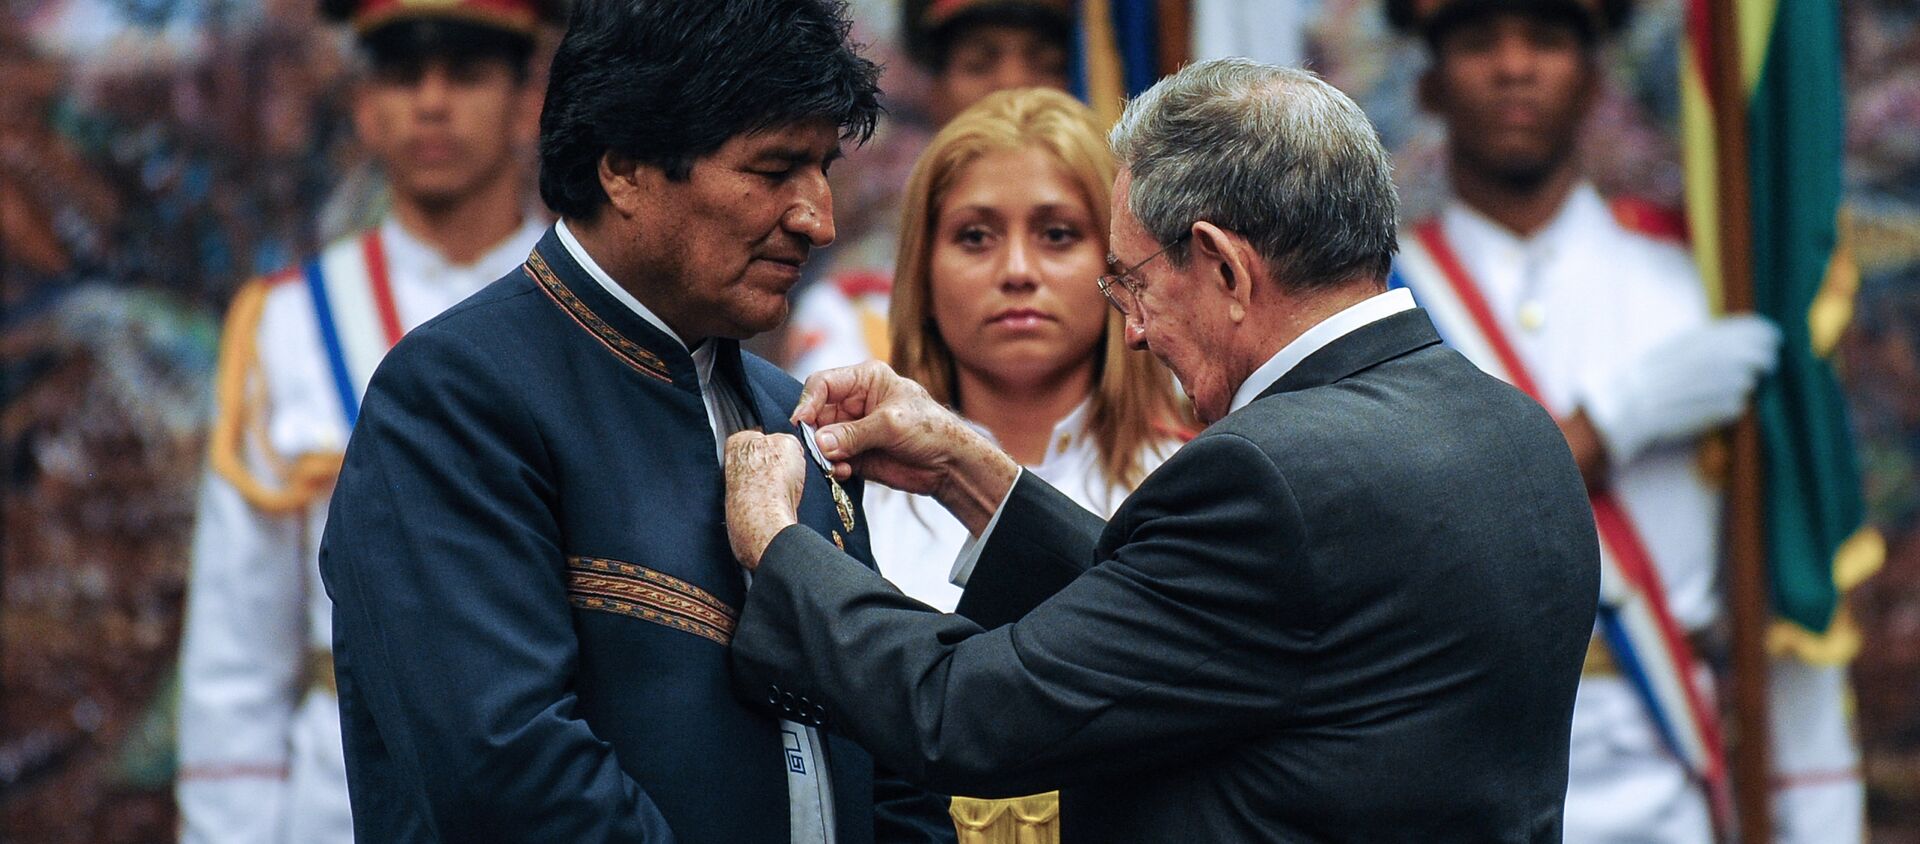 Presidente cubano, Raúl Castro, otorga la Orden José Martí al presidente boliviano, Evo Morales en la Habana, Cuba - Sputnik Mundo, 1920, 23.05.2016